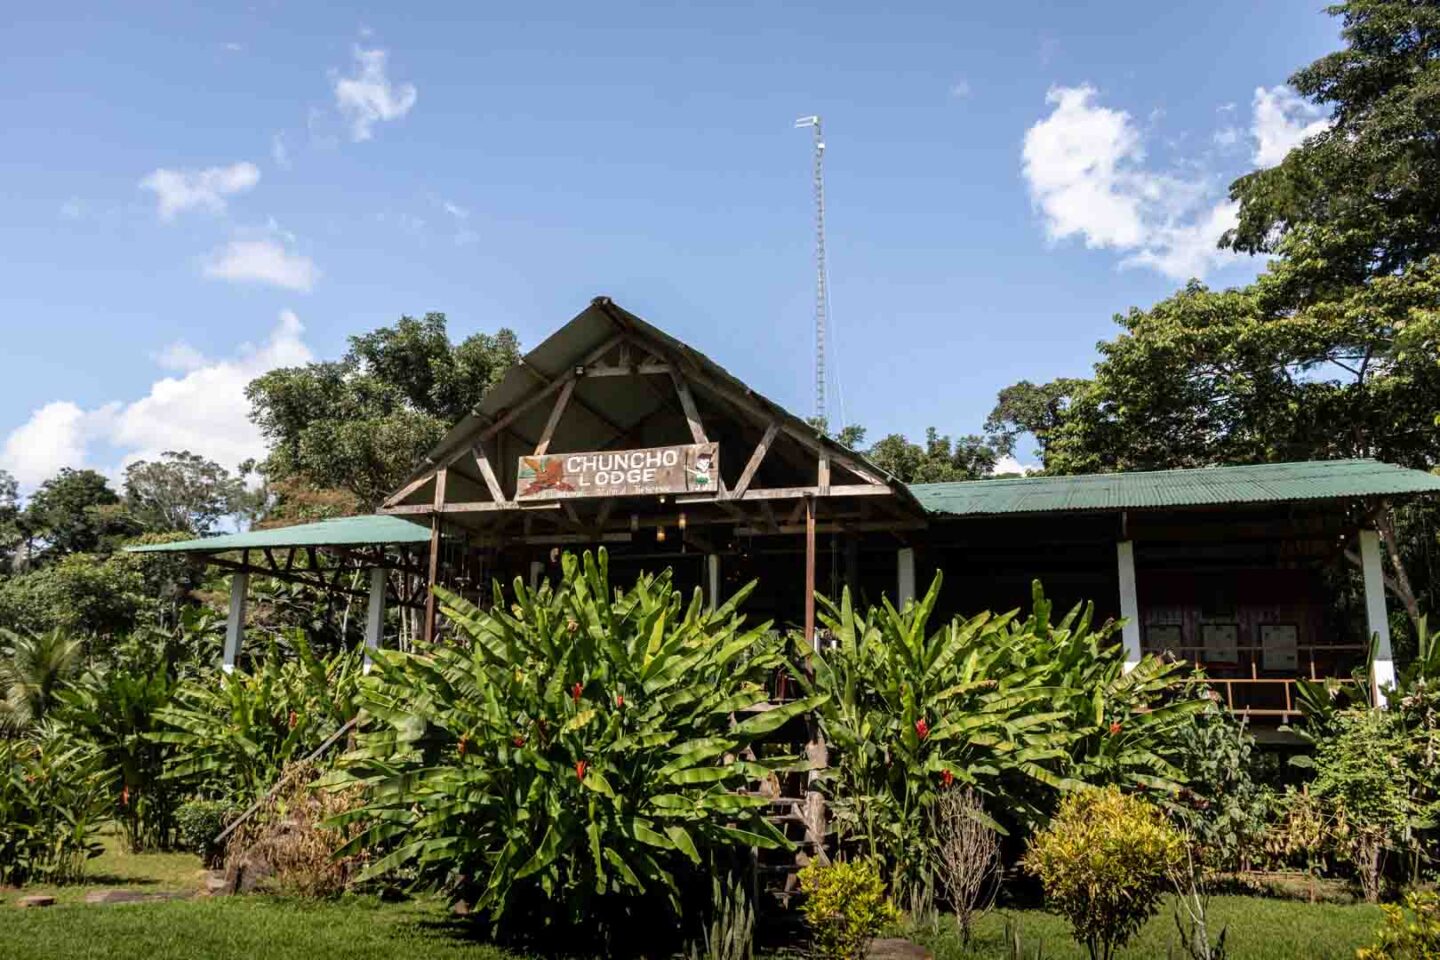 Chuncho Lodge in the Peruvian Amazon